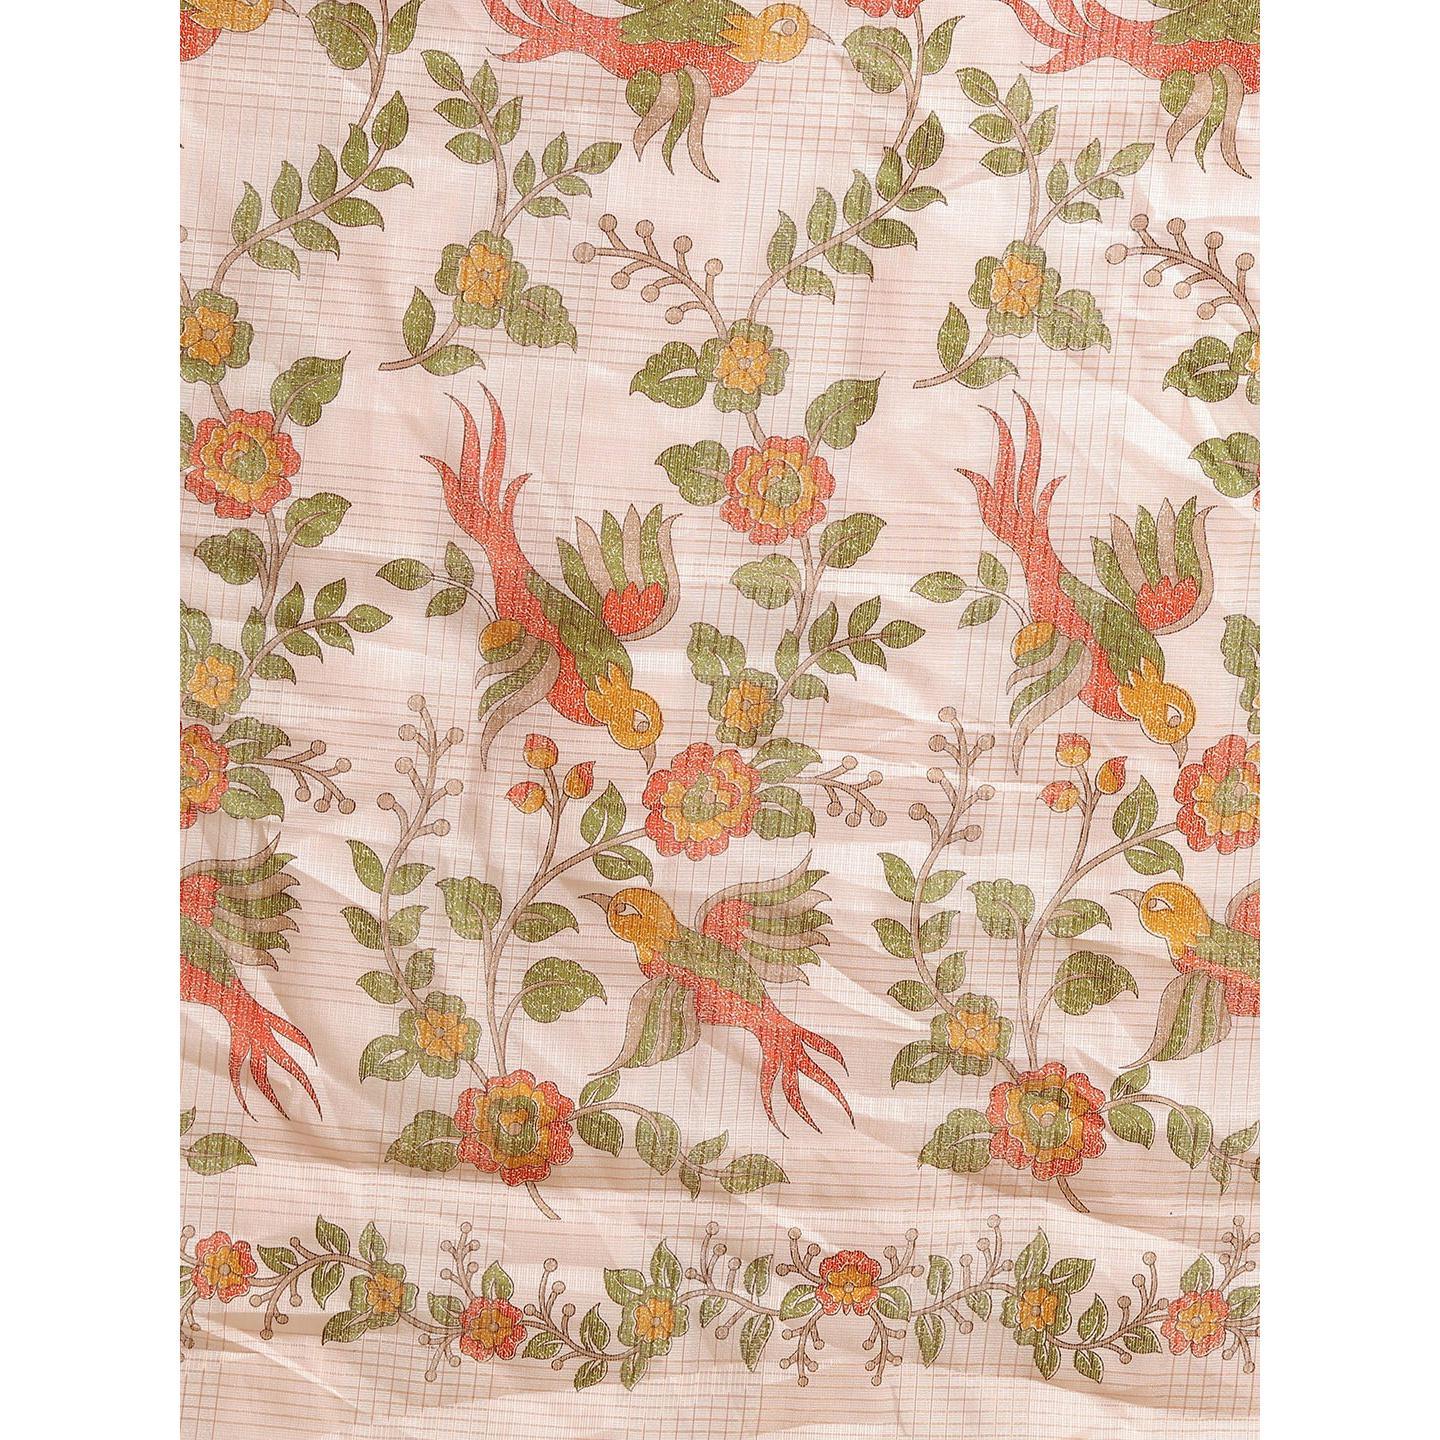 Adorable Peach Colored Casual Wear Floral Printed Linen Saree - Peachmode